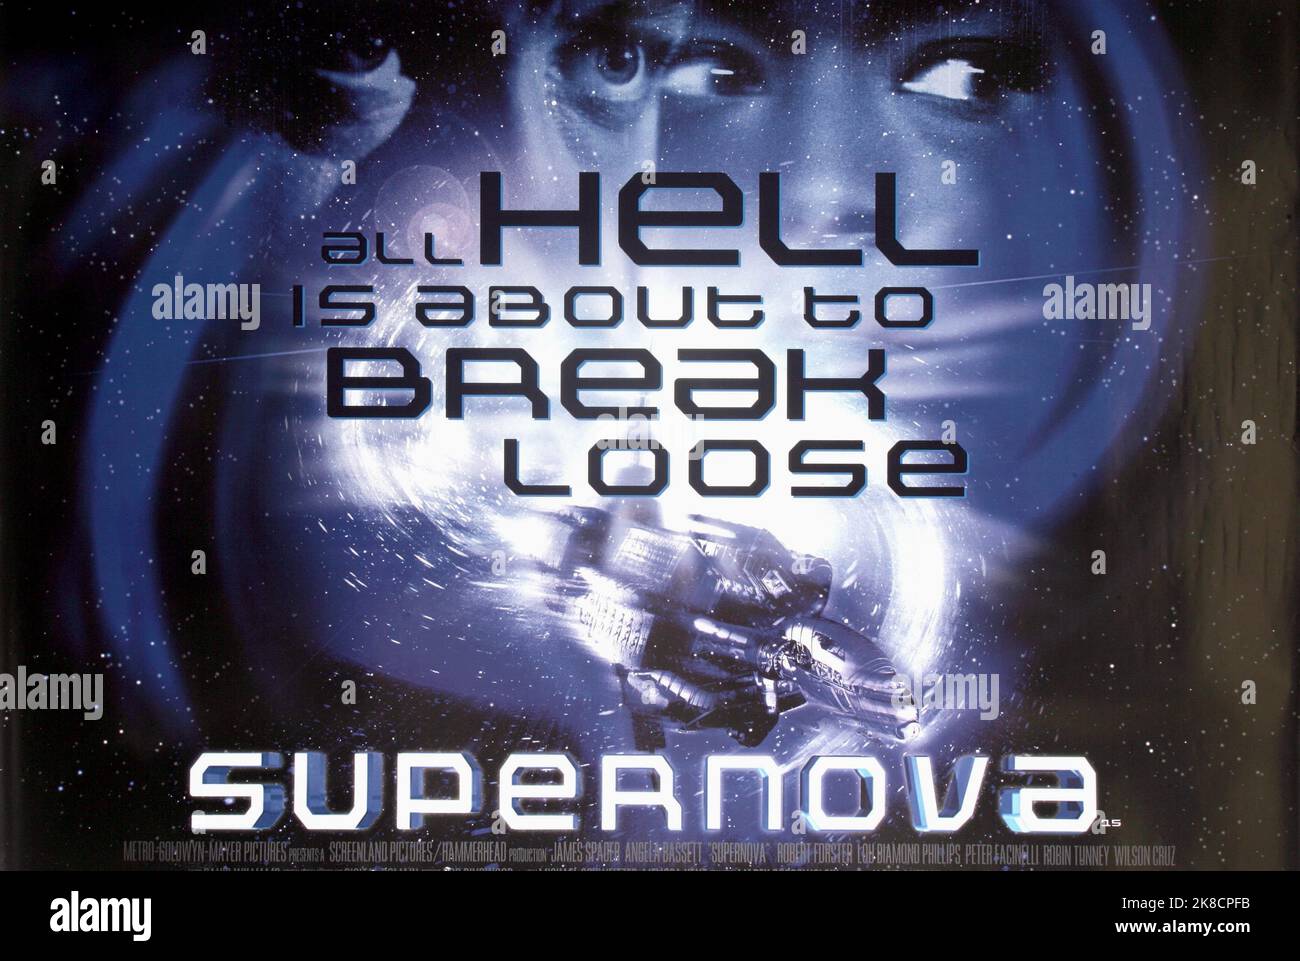 supernova movie poster